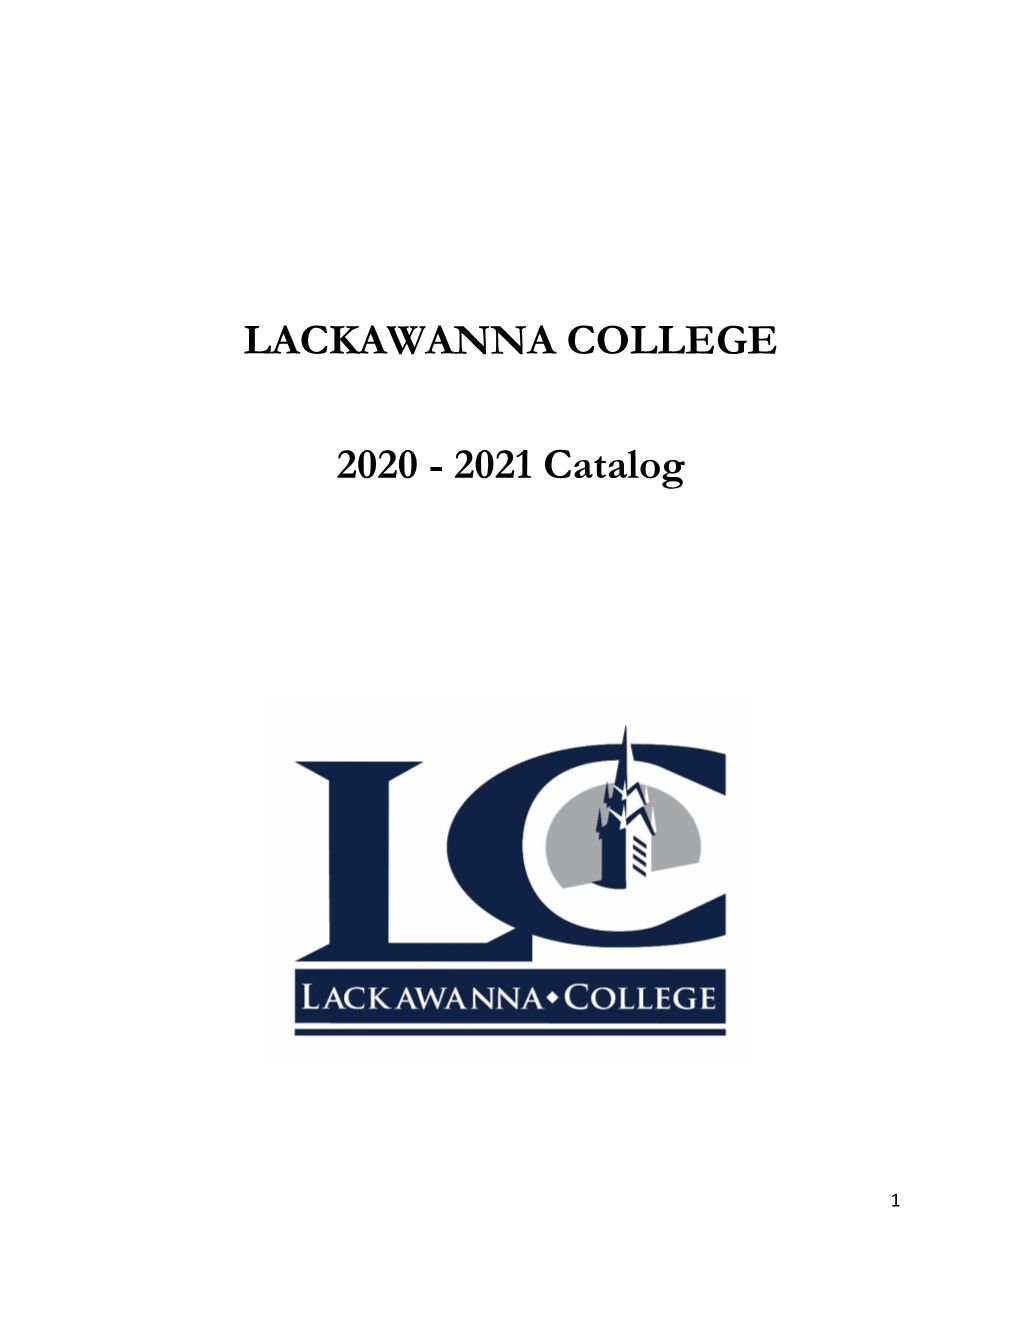 Lackawanna College 2020